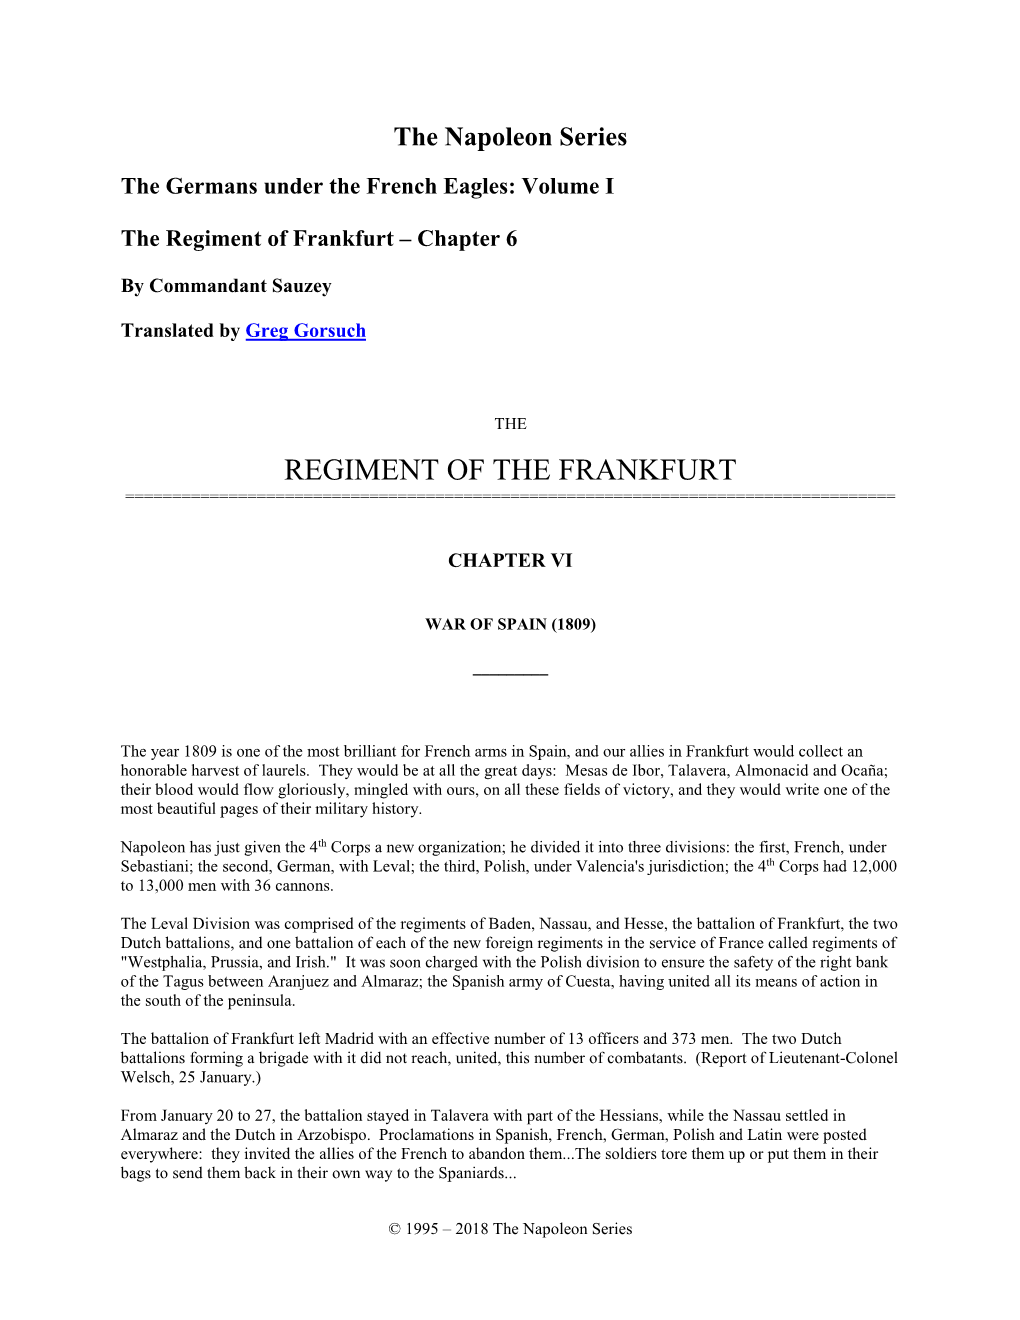 Regiment of the Frankfurt ======